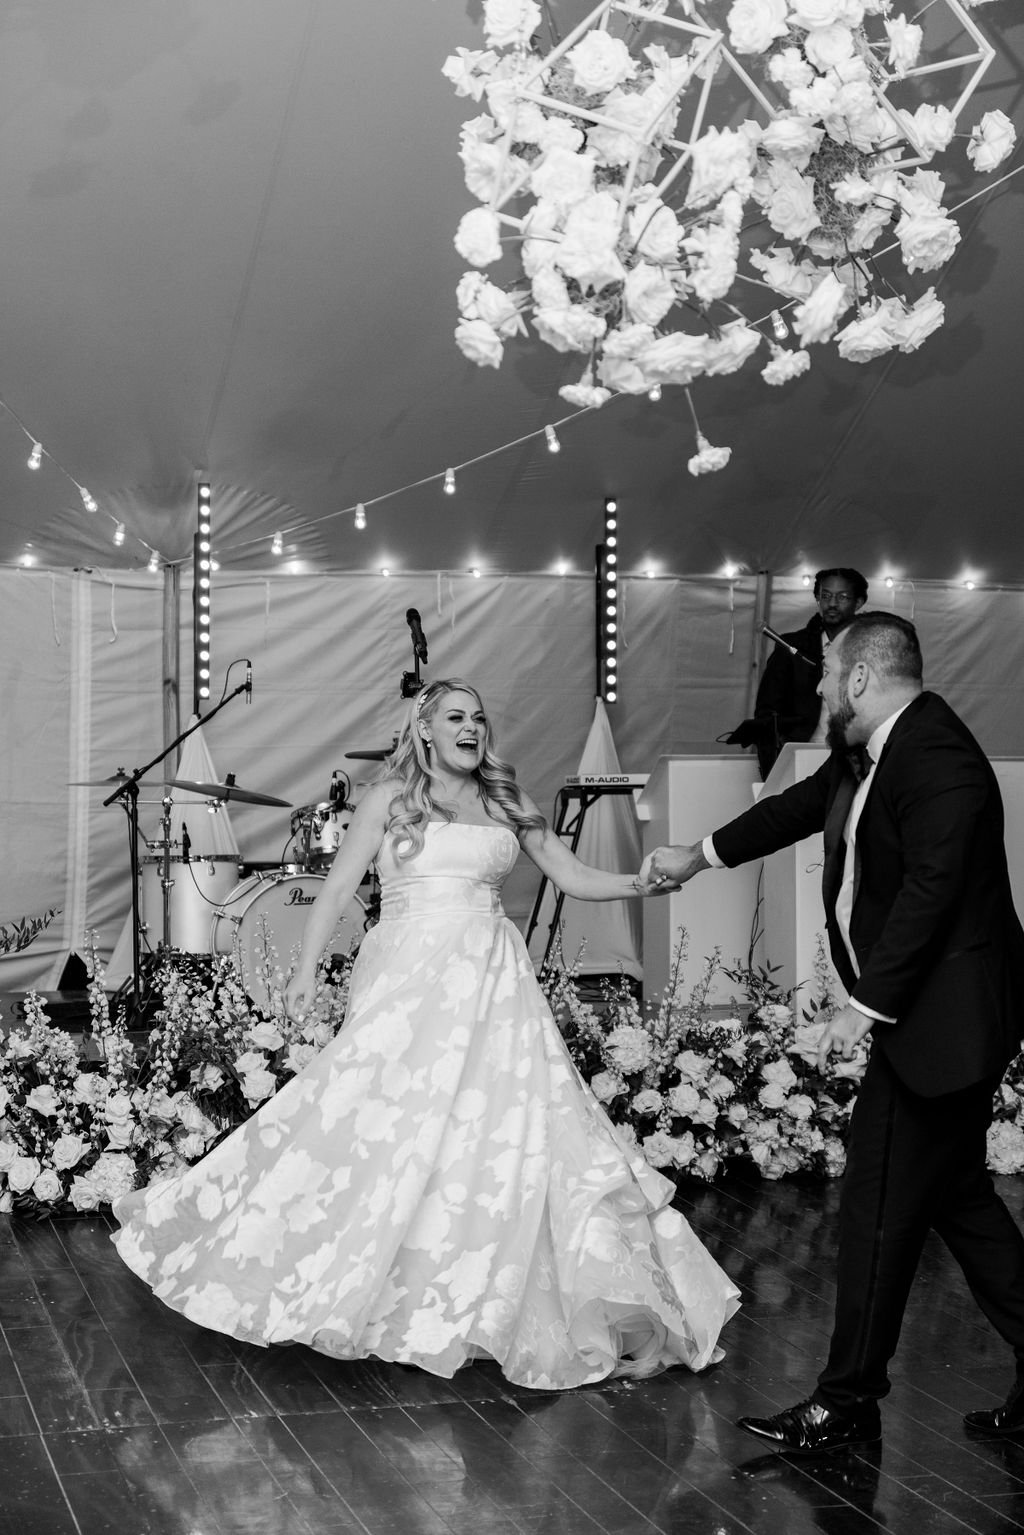  outdoor wedding first dance tent reception caolina herrera strapless gown white florals  